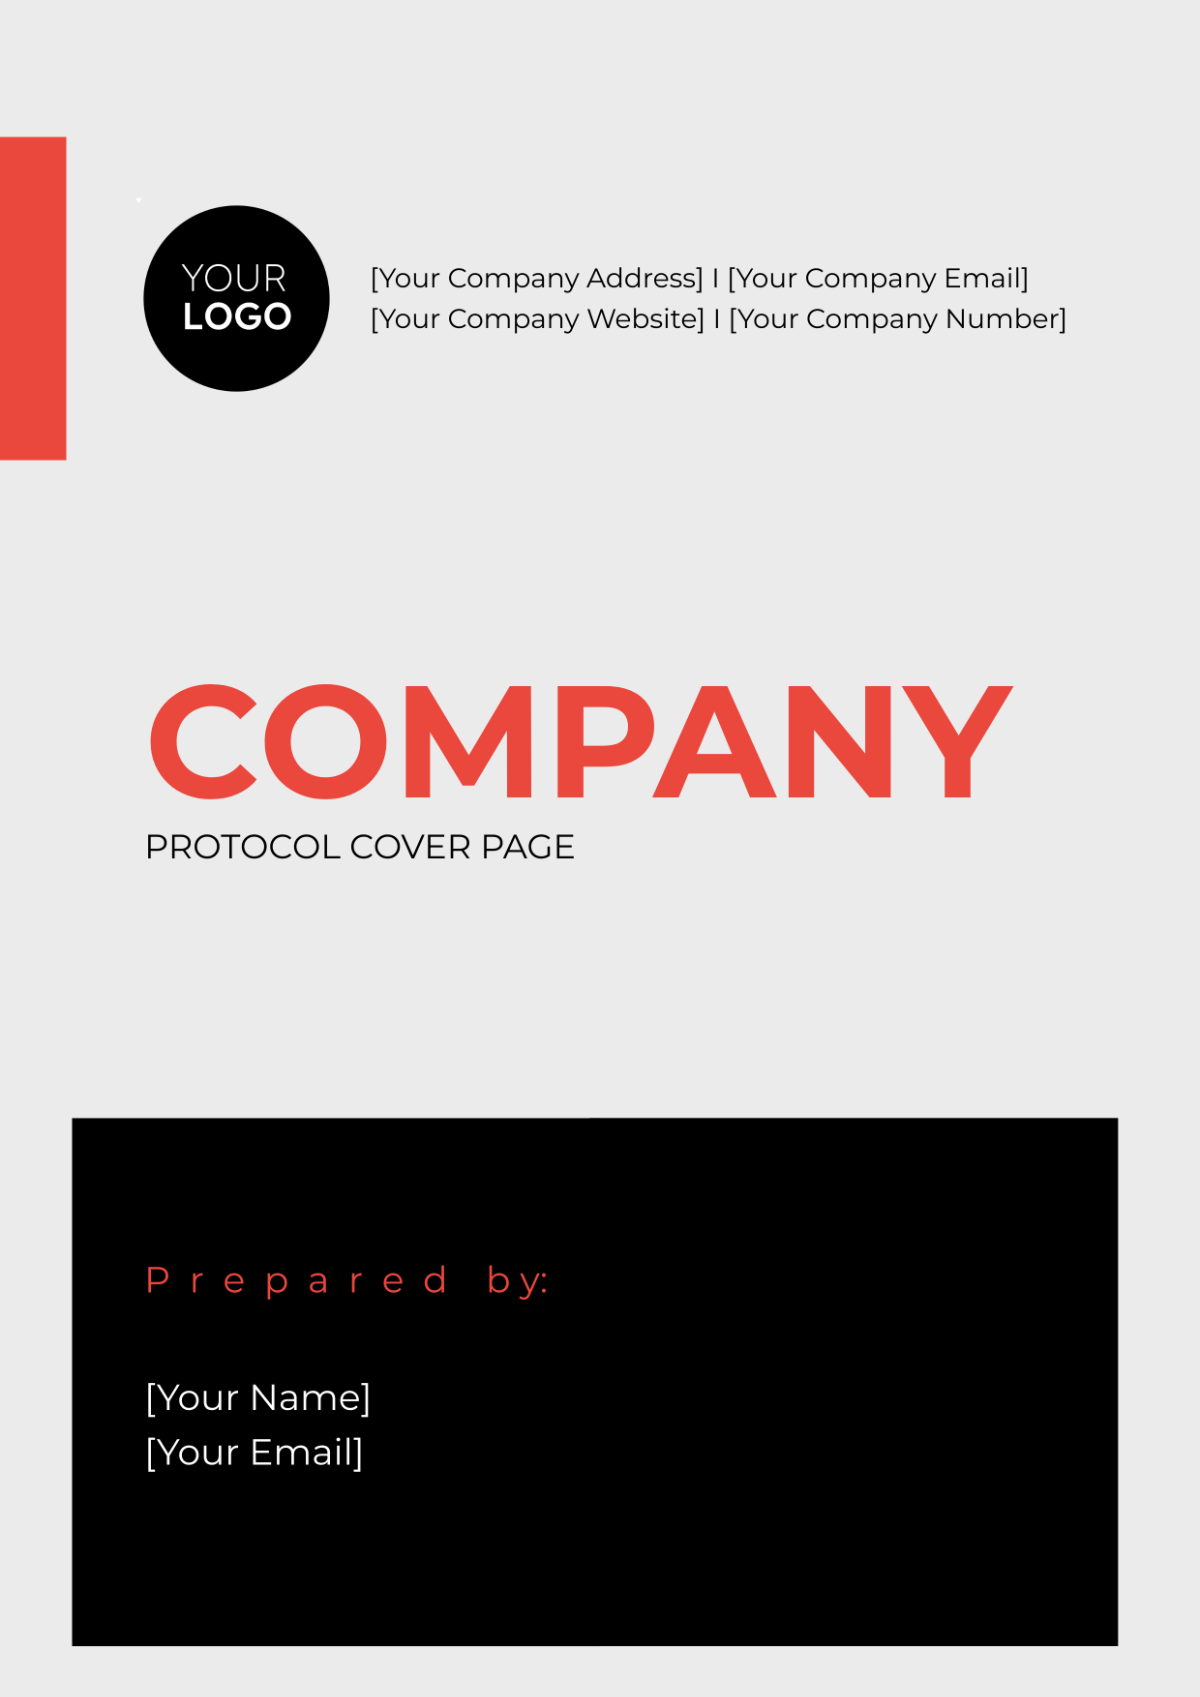 Company Protocol Cover Page